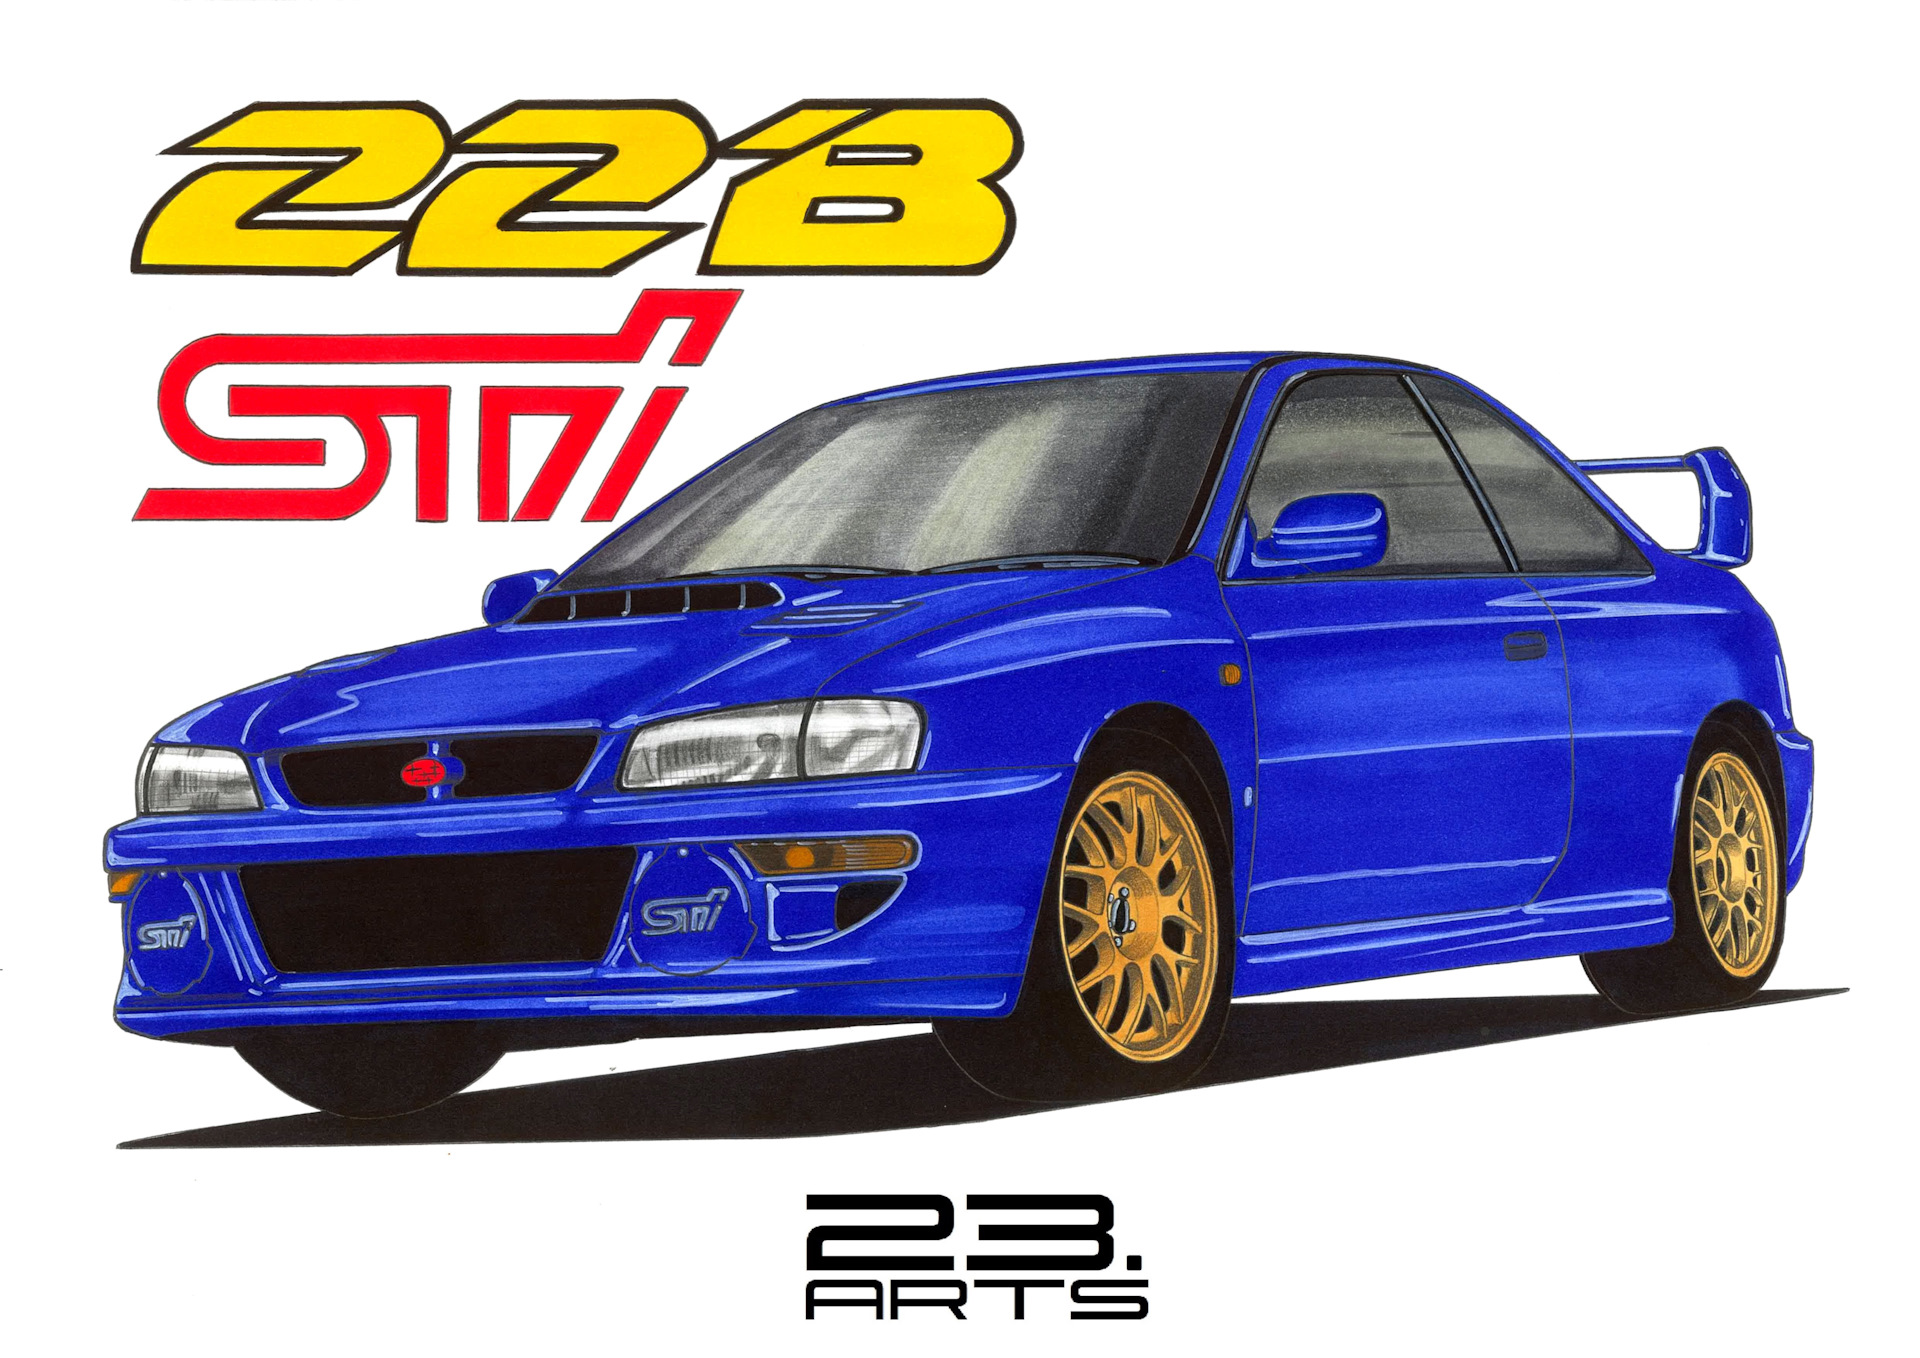 Subaru Impreza 22b рисунок